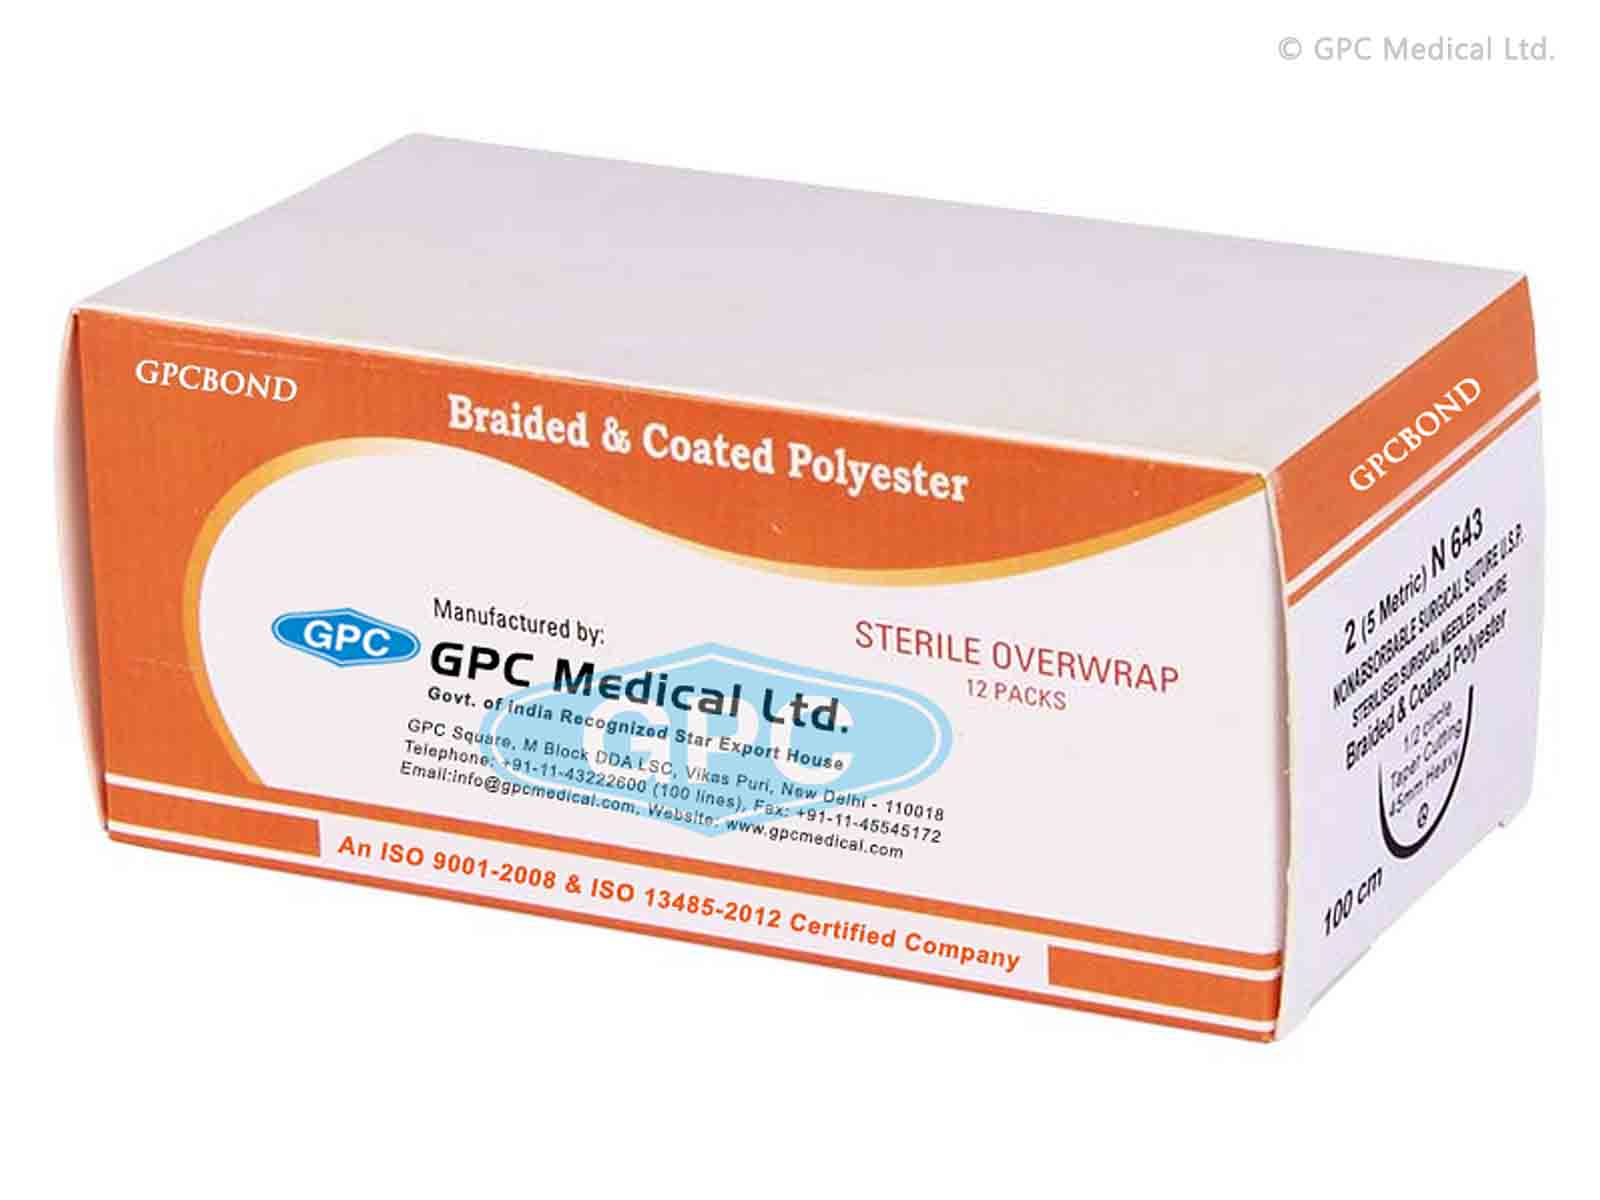 GPCBOND - Braided & Coated Polyester